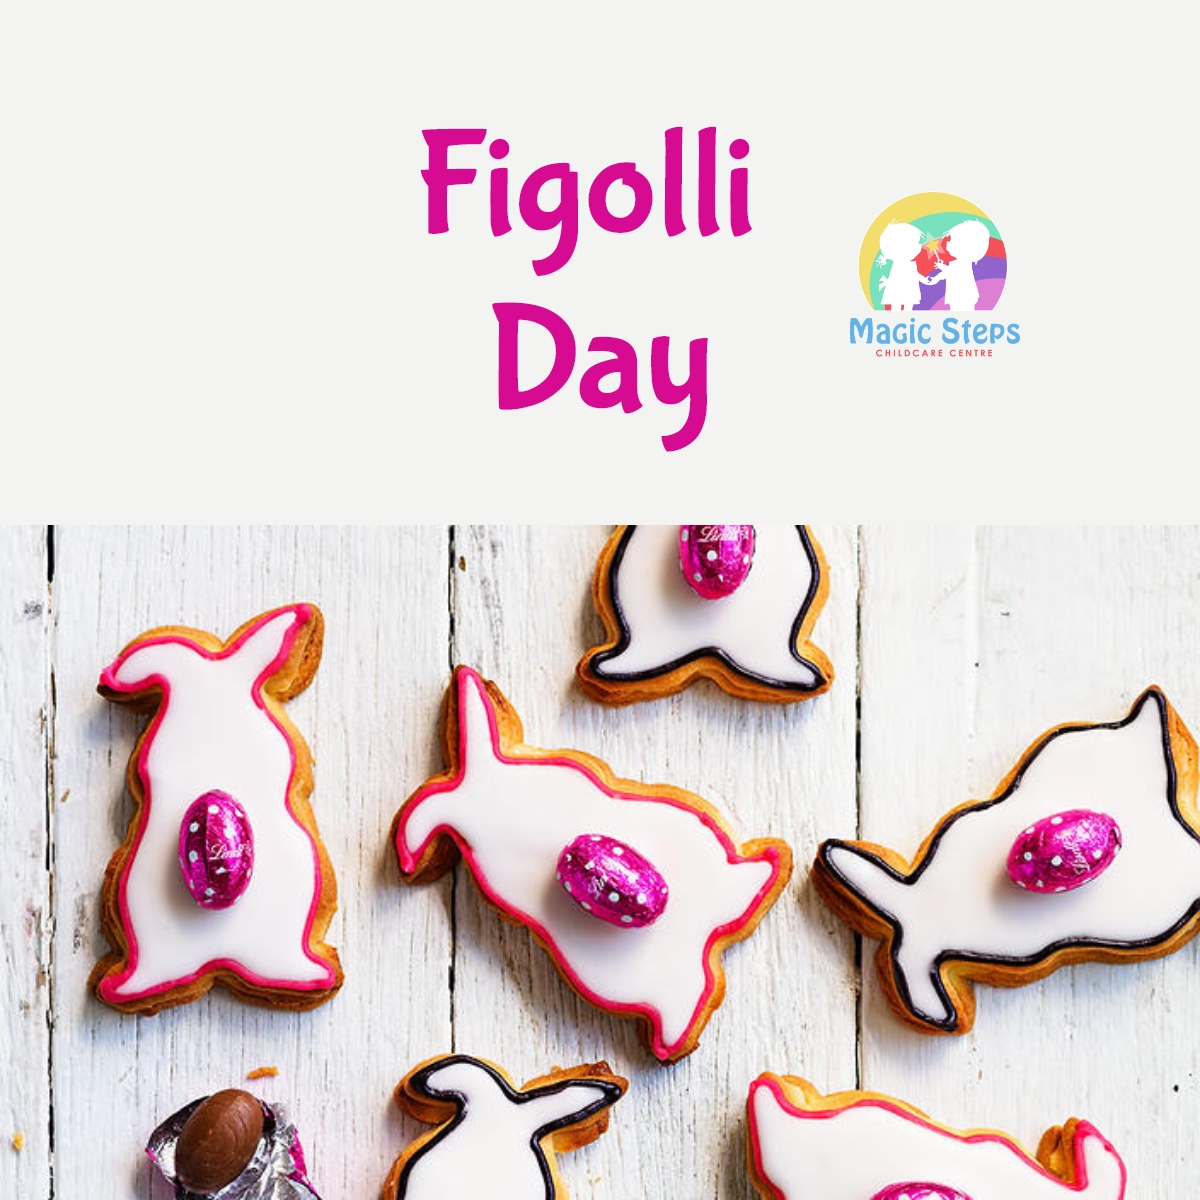 Figolli Day- Monday 11th April